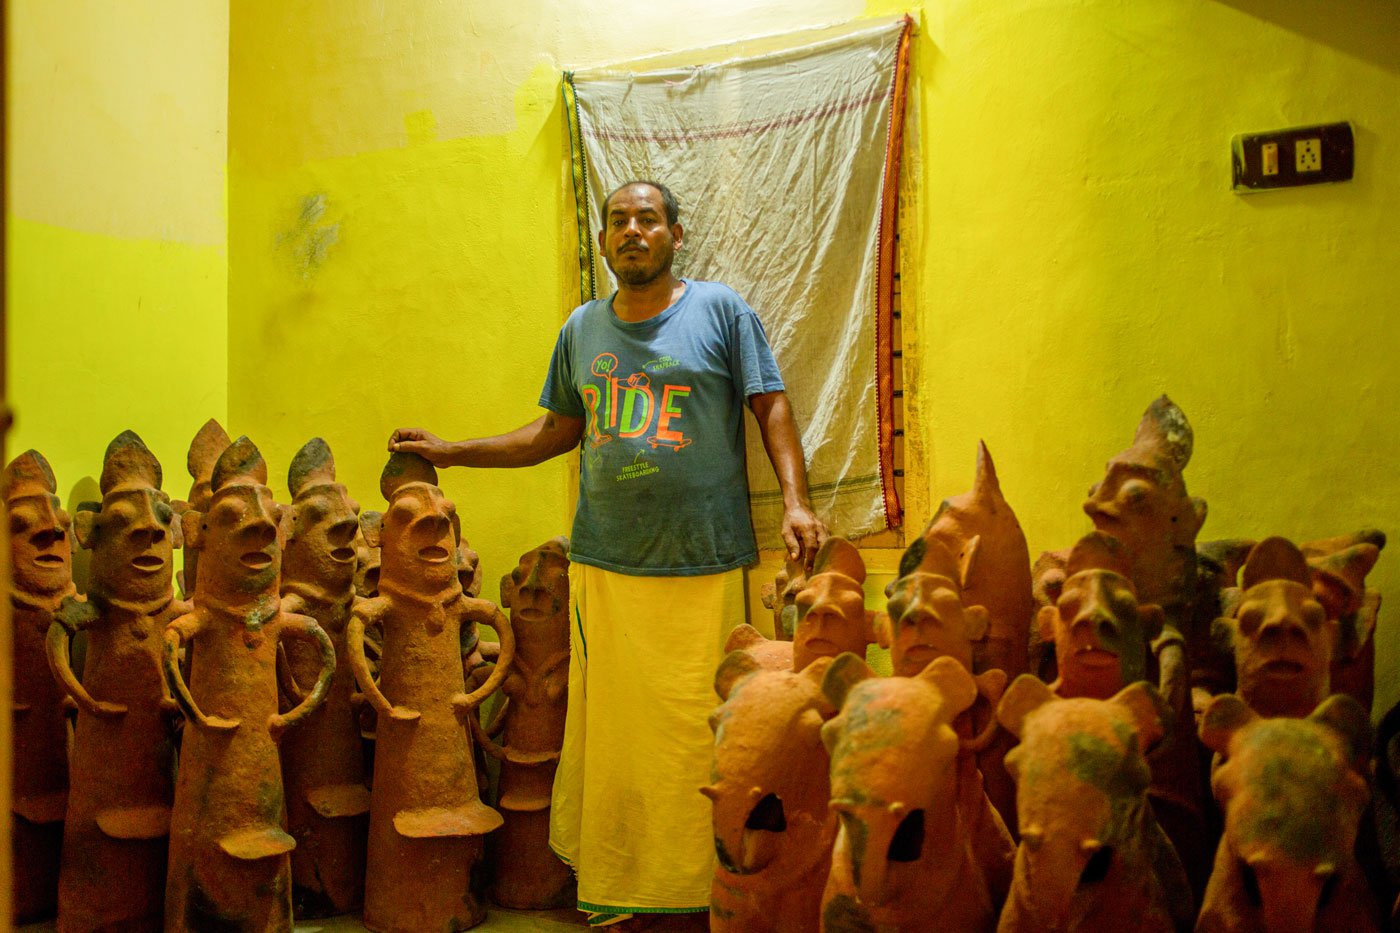 Dilli anna makes idols of Kannisamy, the deity worshipped by fishing communities along the coastline of north Tamil Nadu.